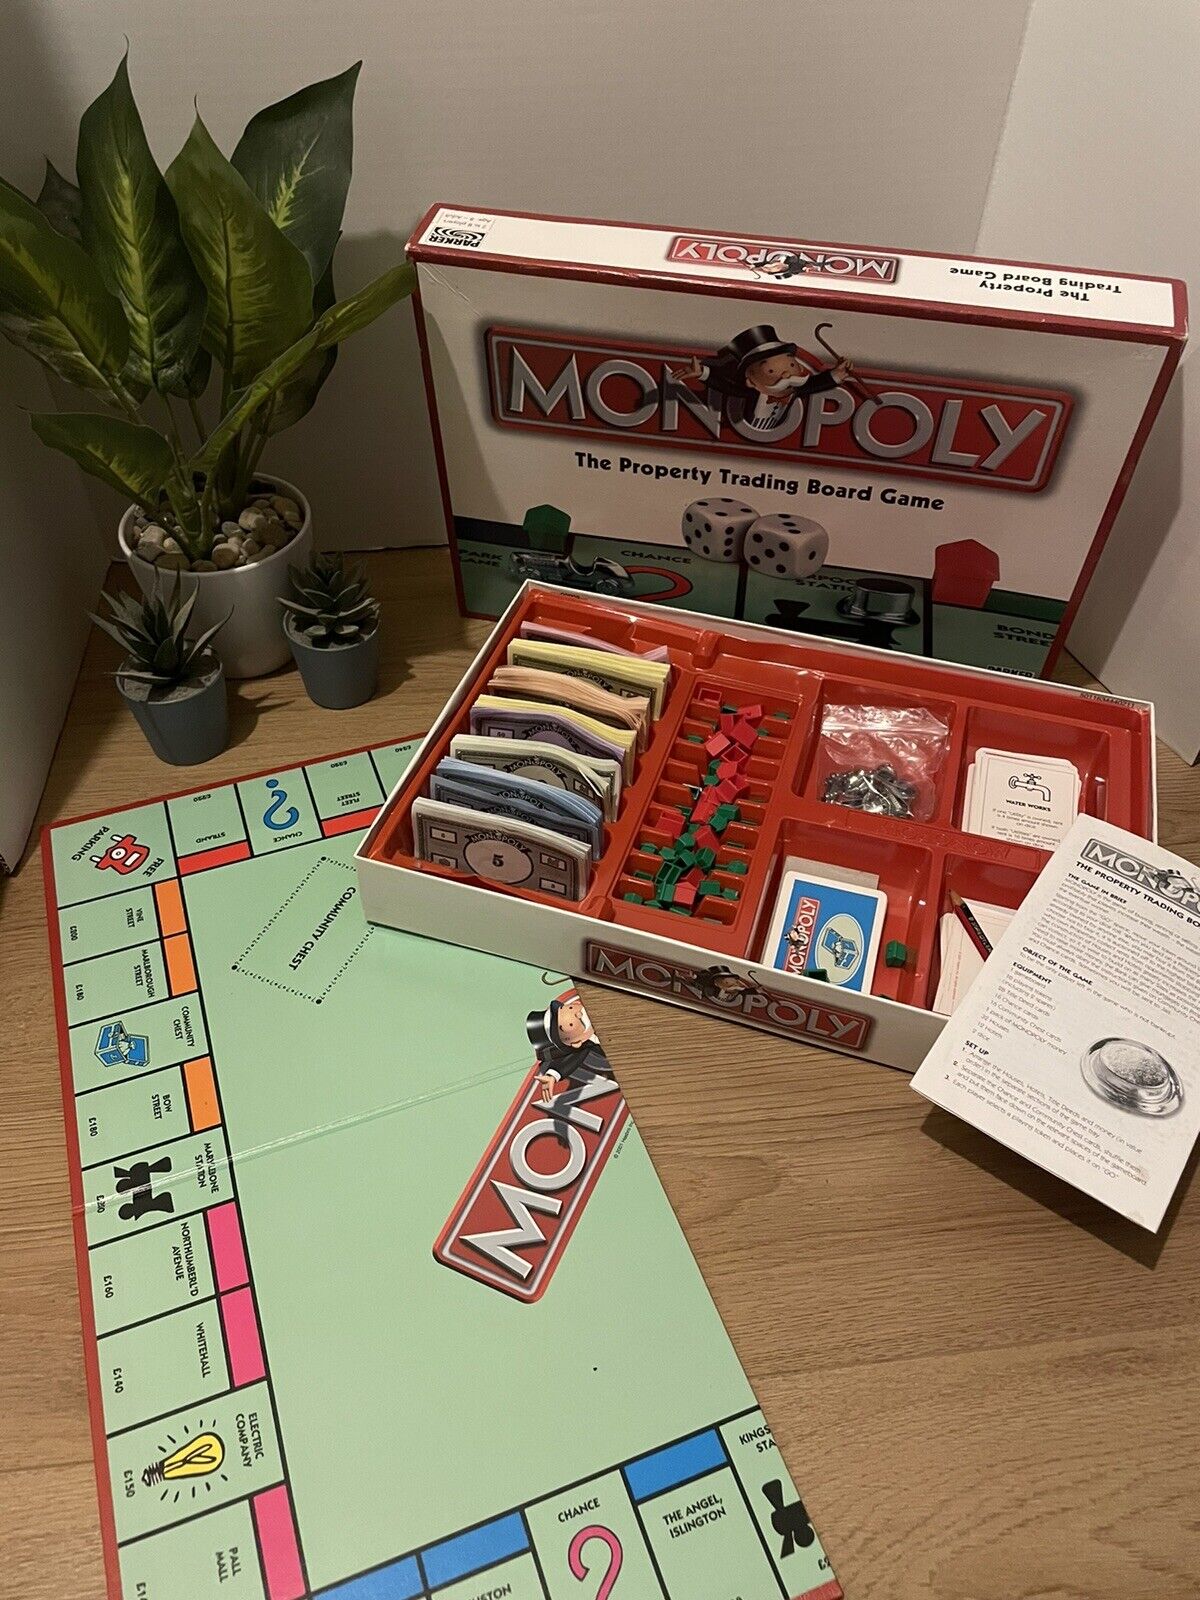 monopoly board game original name